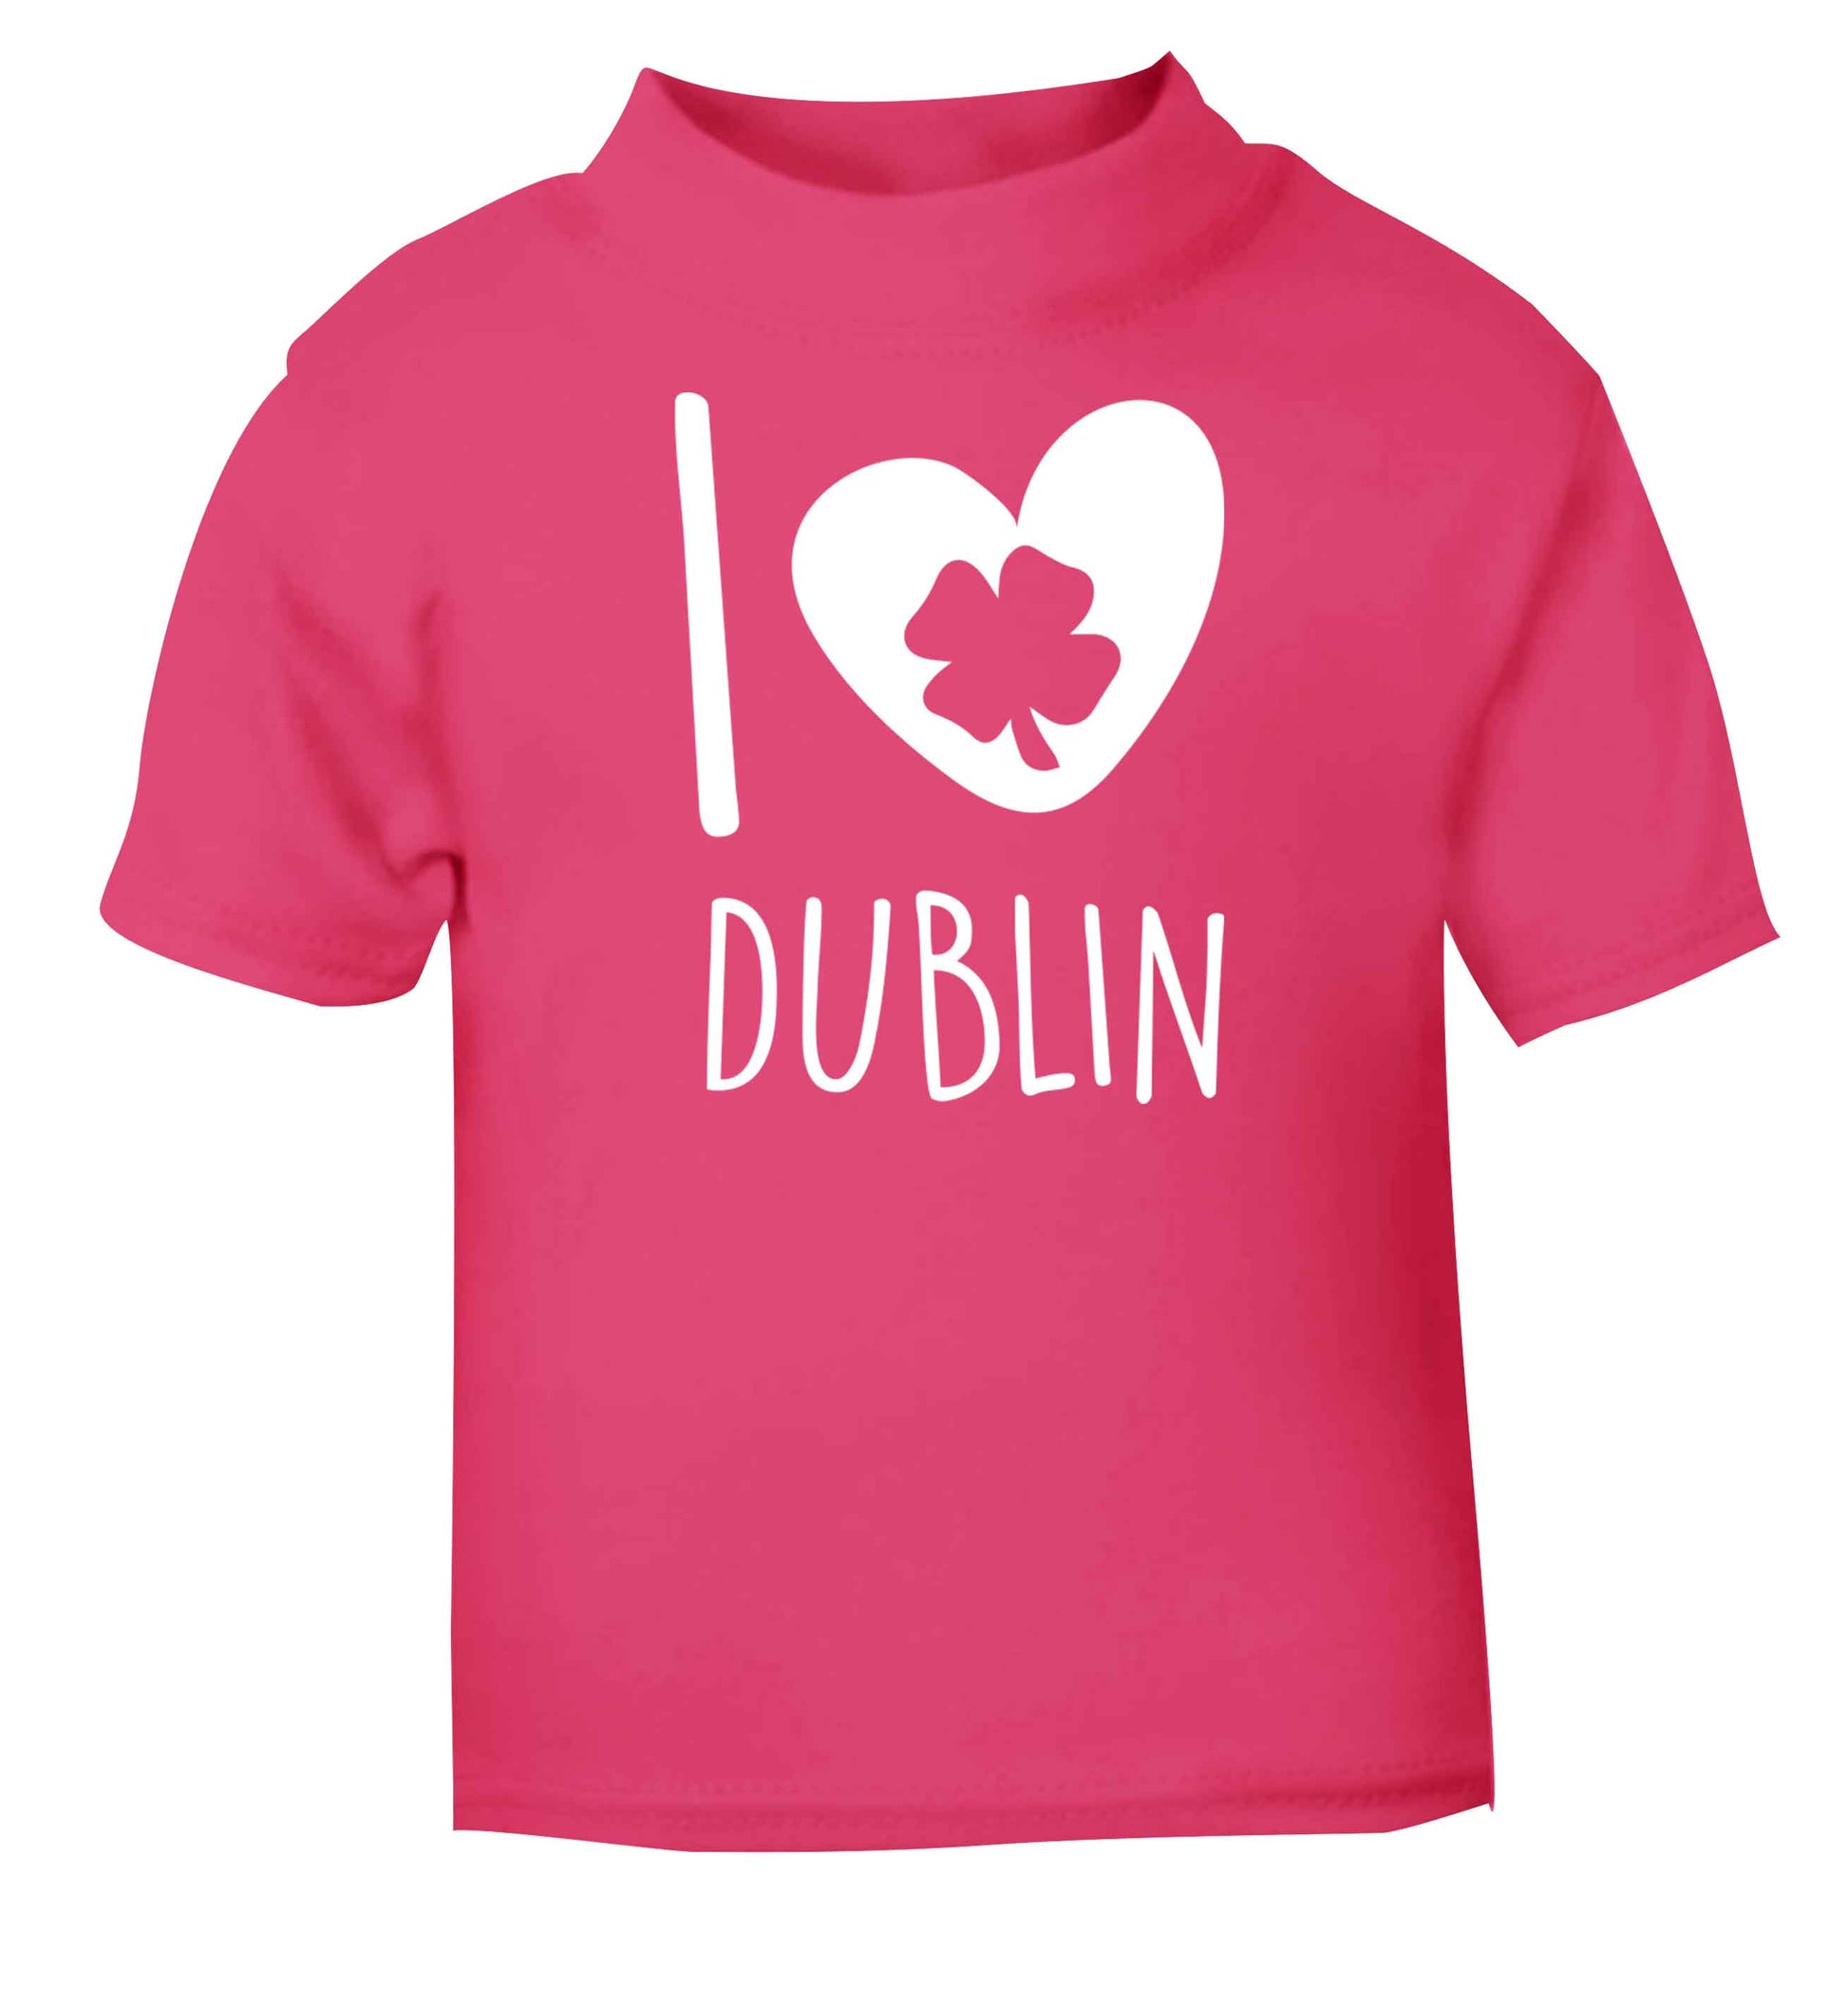 I love Dublin pink baby toddler Tshirt 2 Years